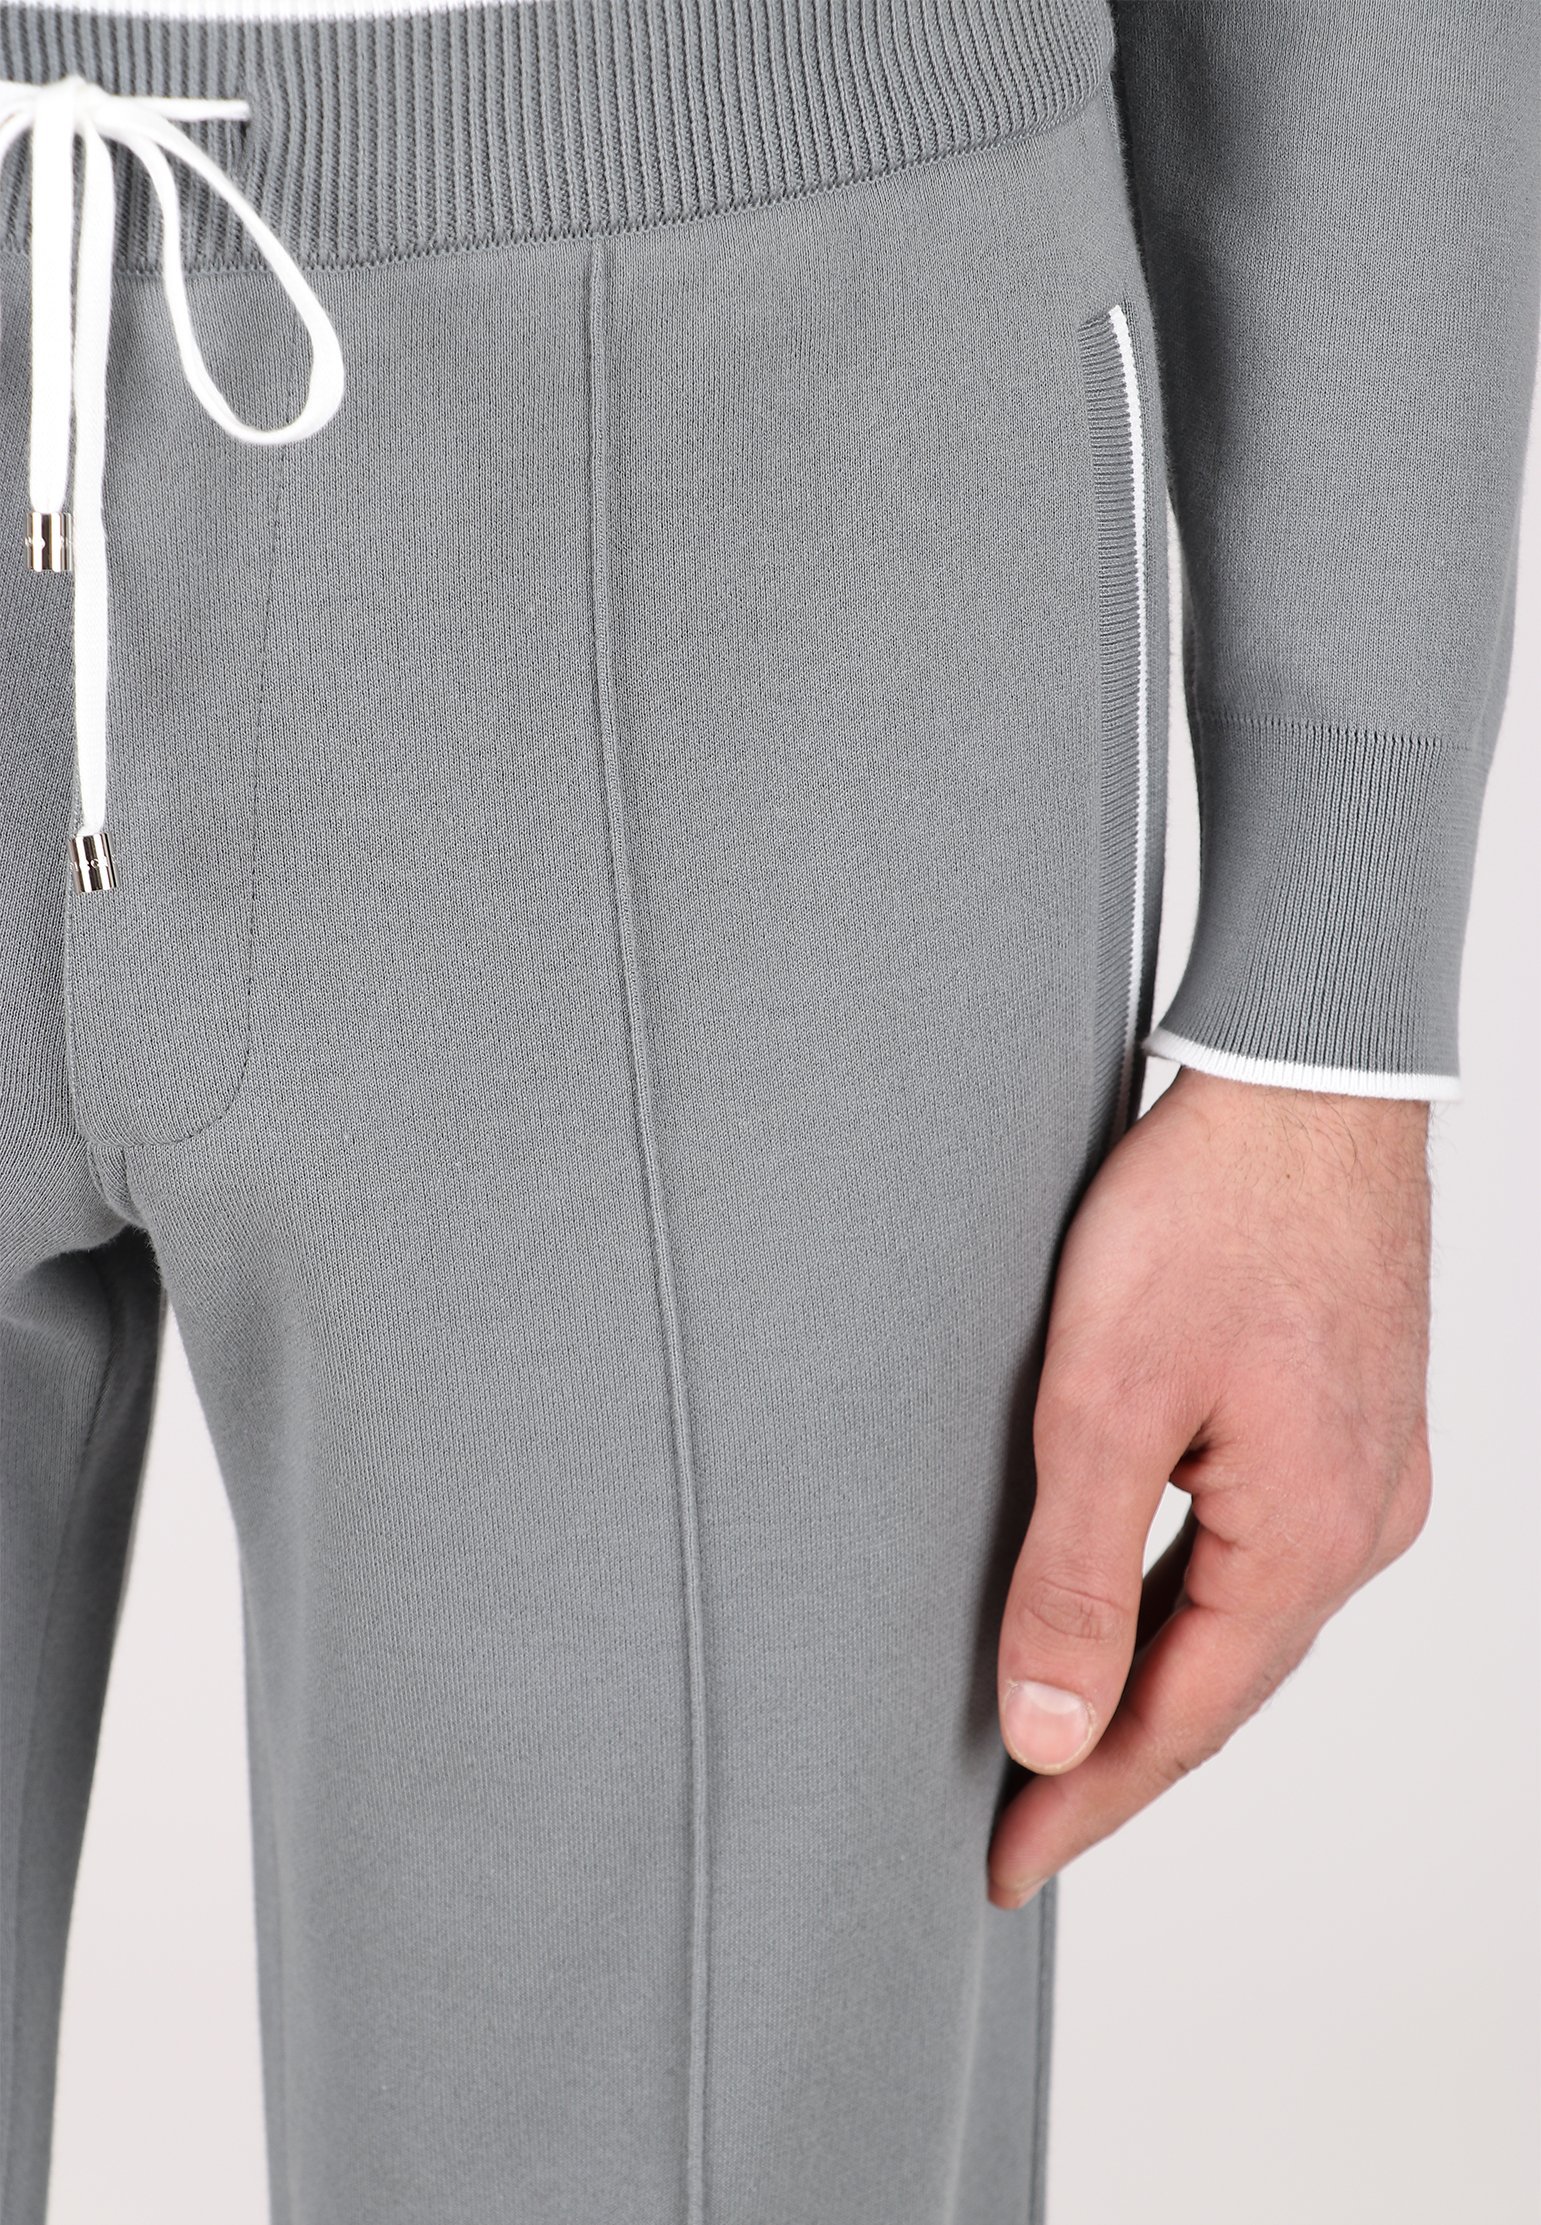 Jogging suit STEFANO RICCI Color: light grey (Code: 322) in online store Allure